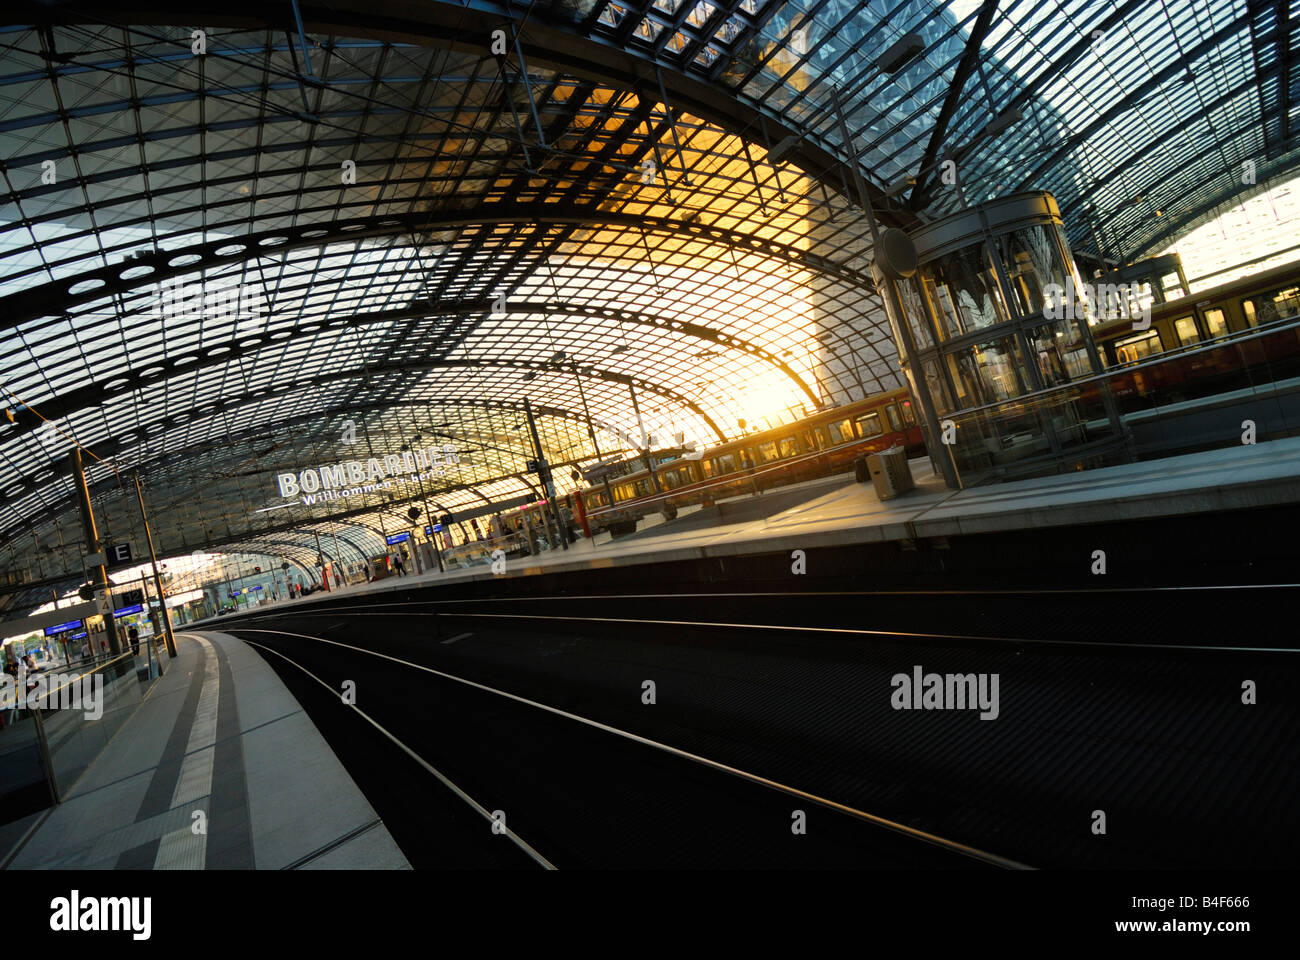 Berlin Central Station 'Hauptbahnhof' railway station, Berlin, Germany Stock Photo